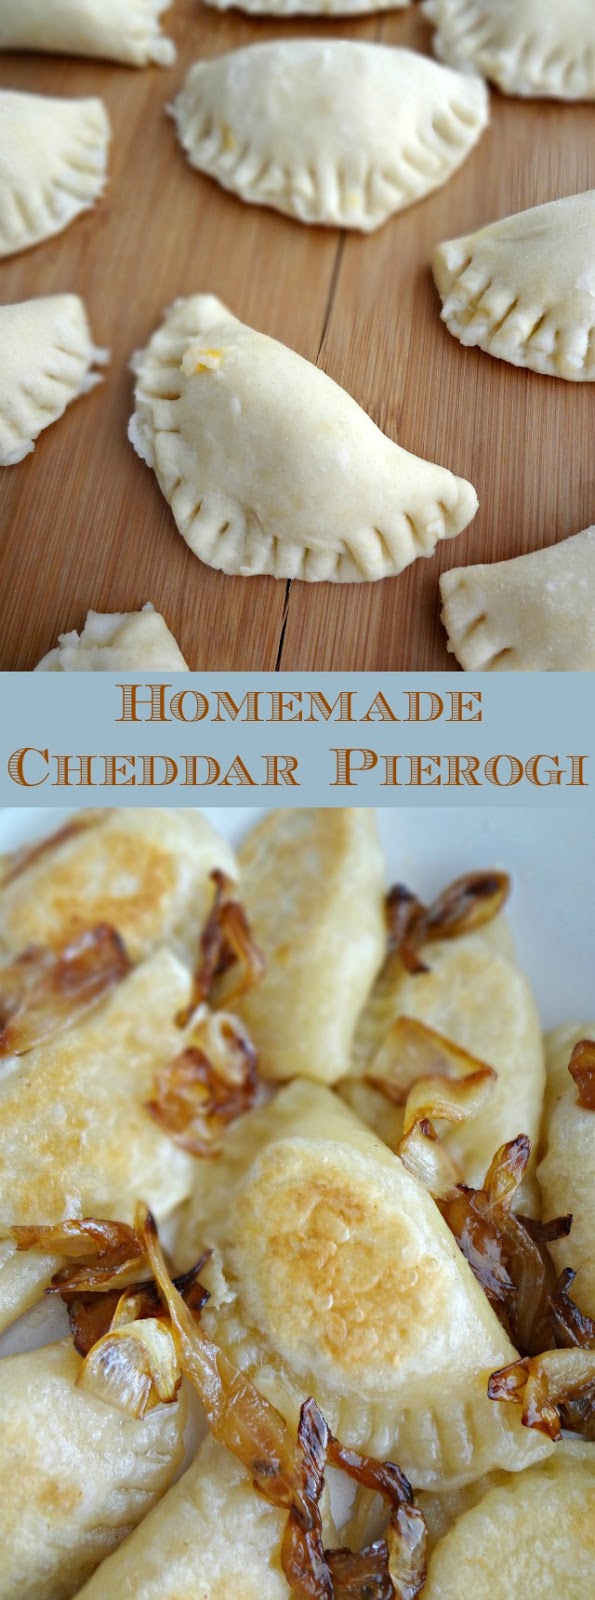 Homemade Cheddar Pierogi {with Caramelized Onions}